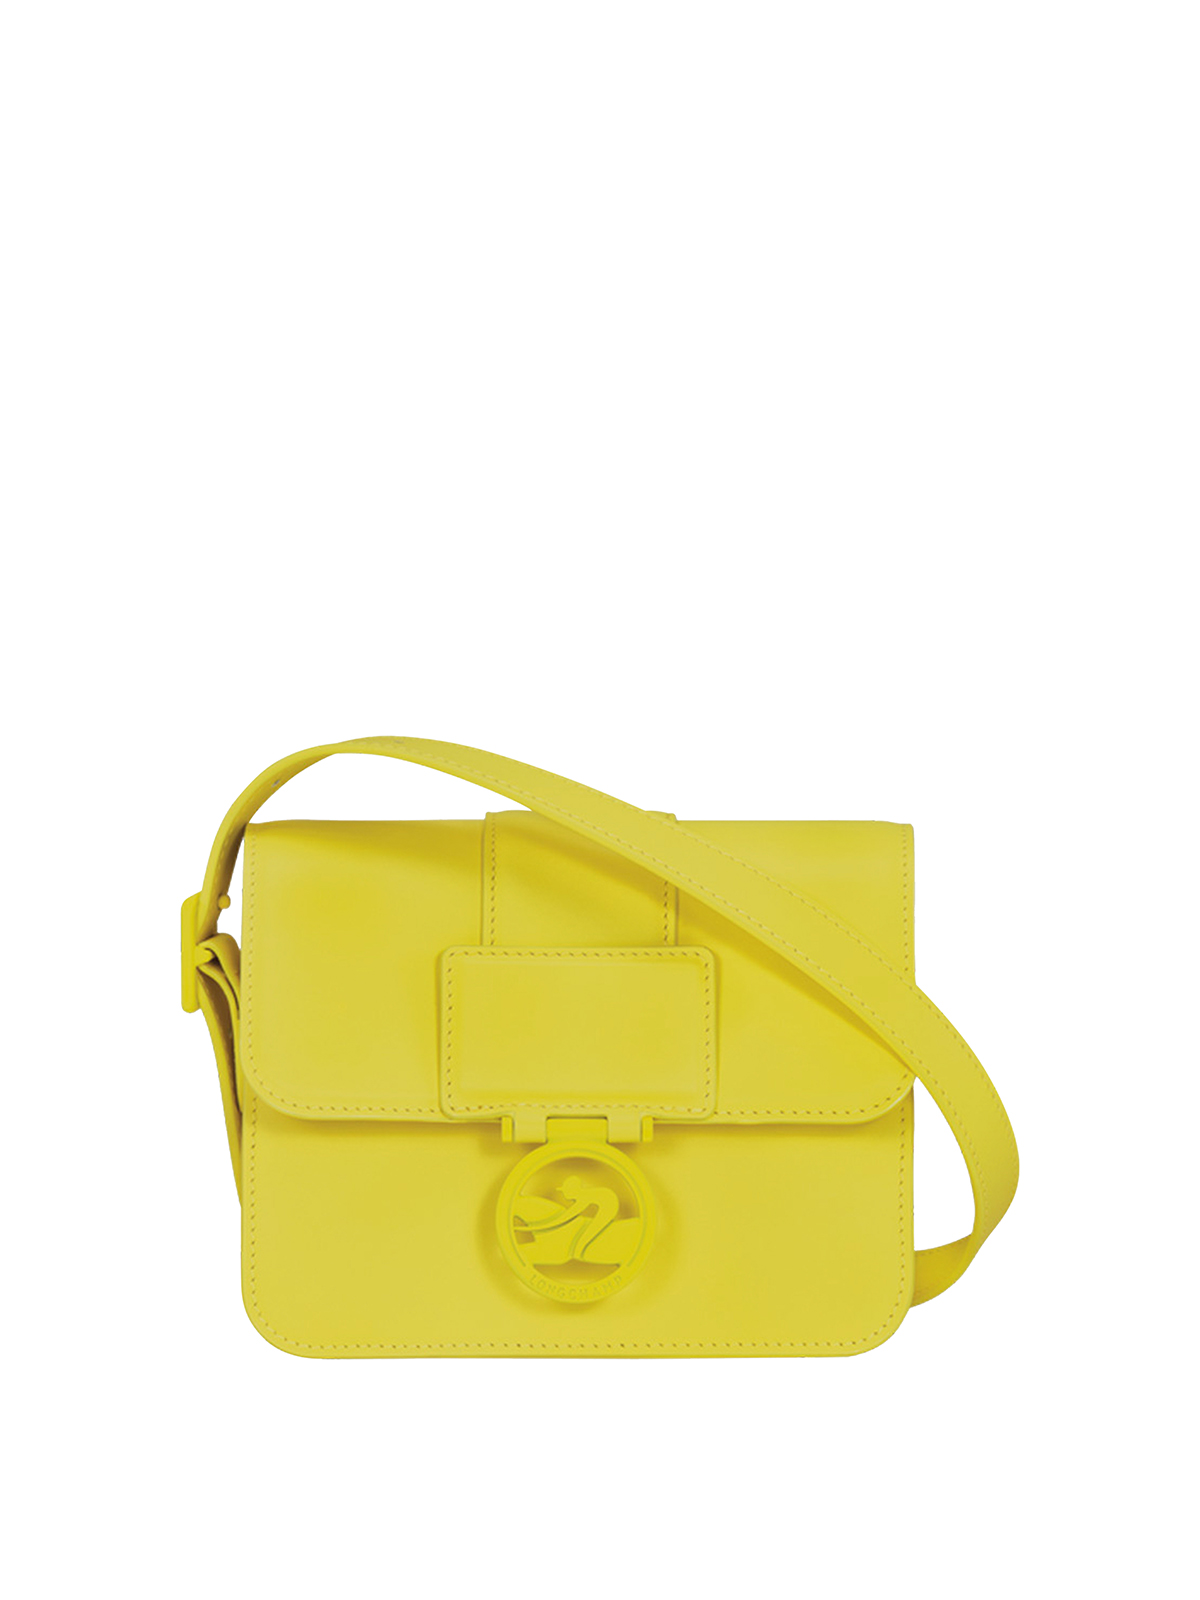 Longchamp Bag In Yellow